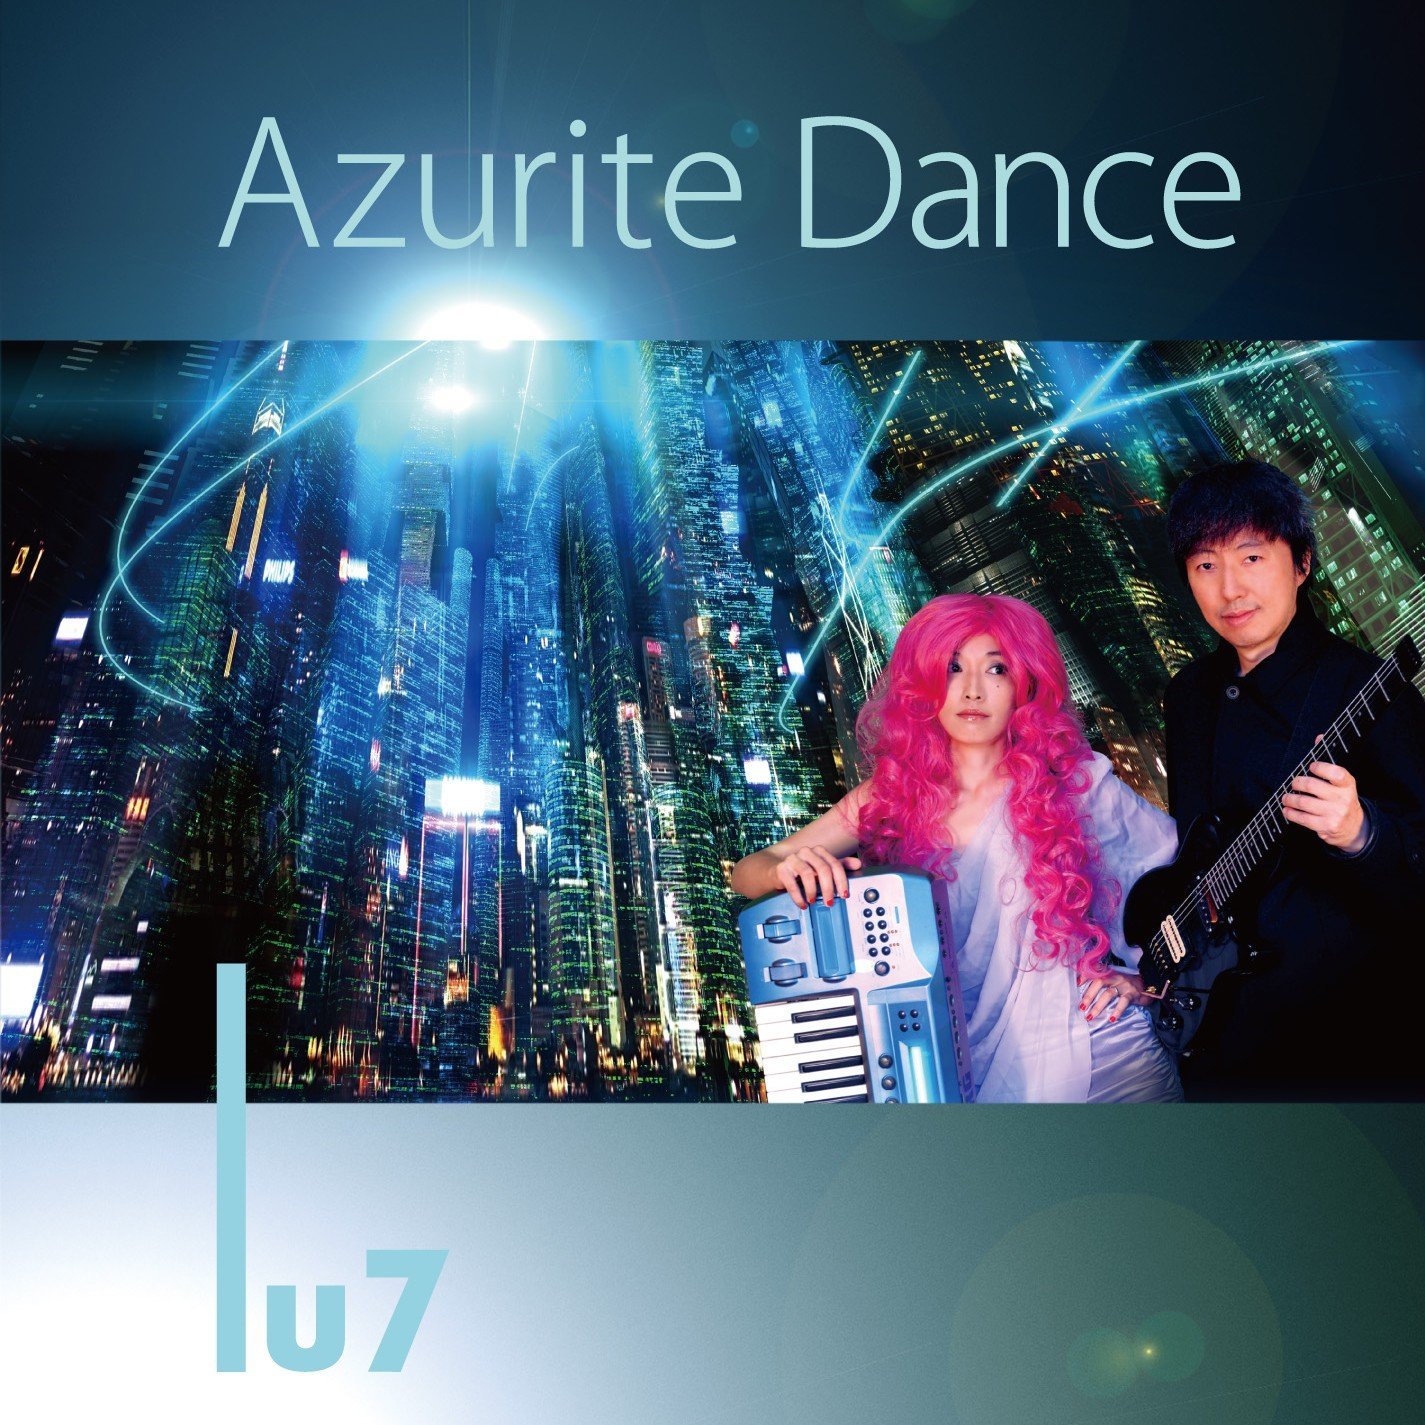 Lu7 Azurite Dance